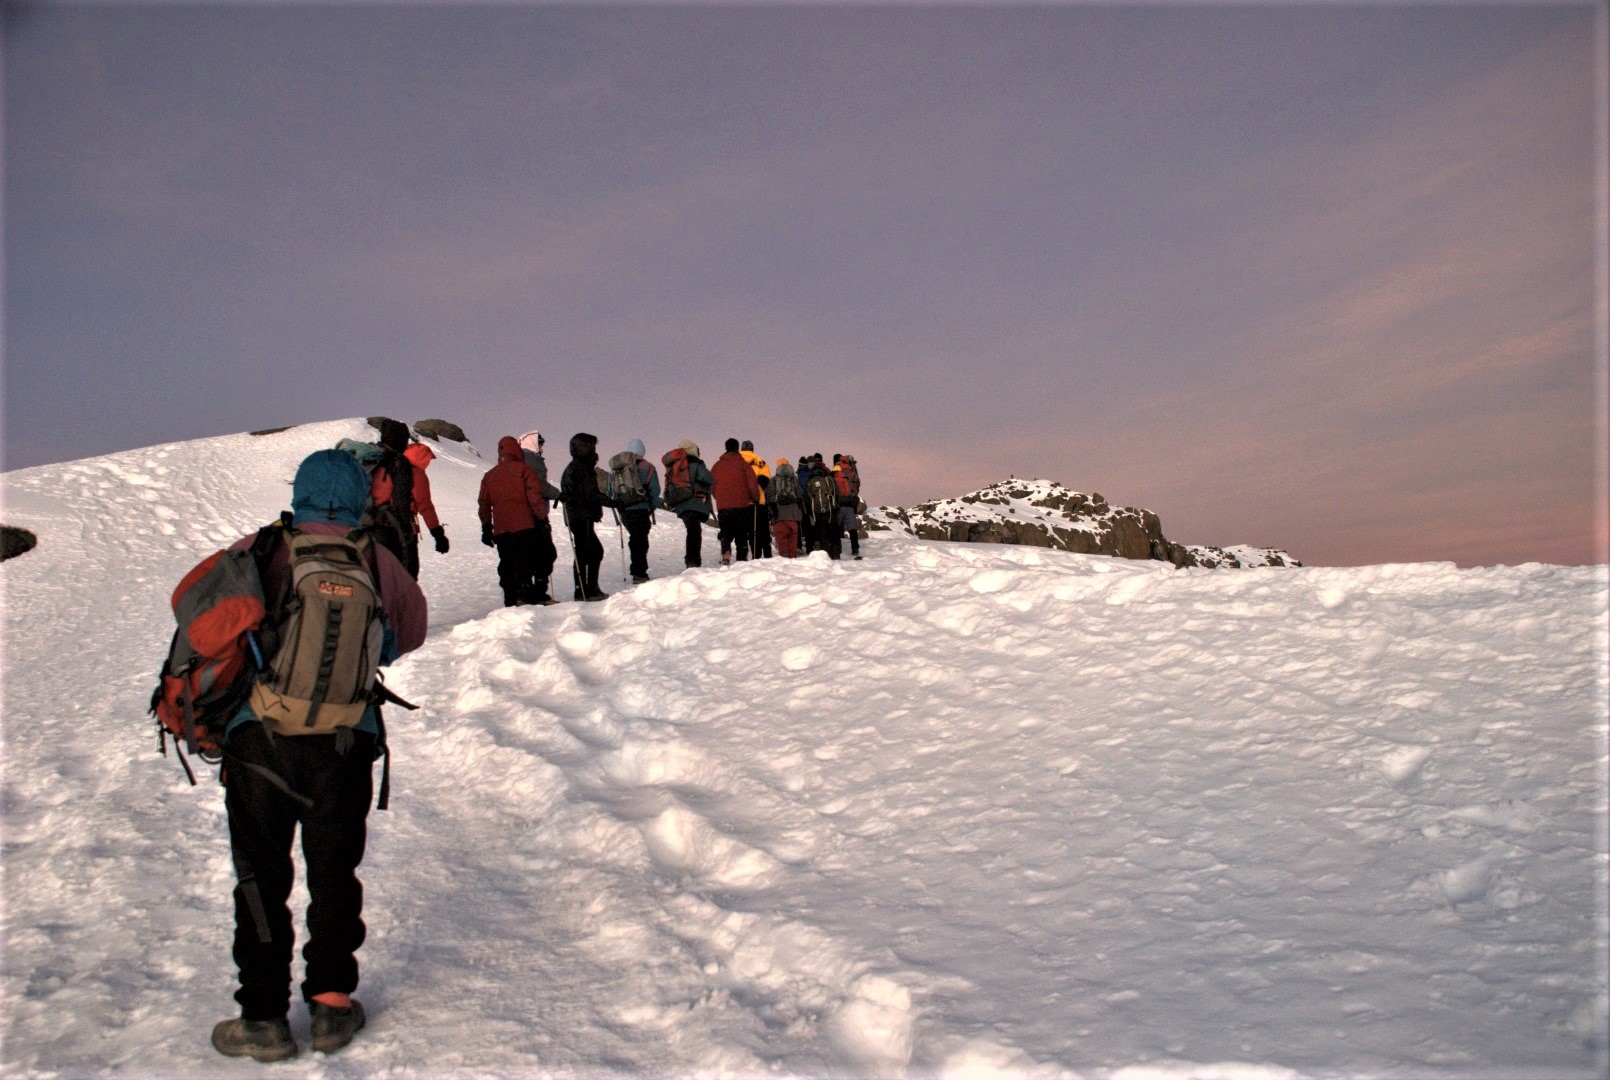 Nearing the Kilimanjaro summit